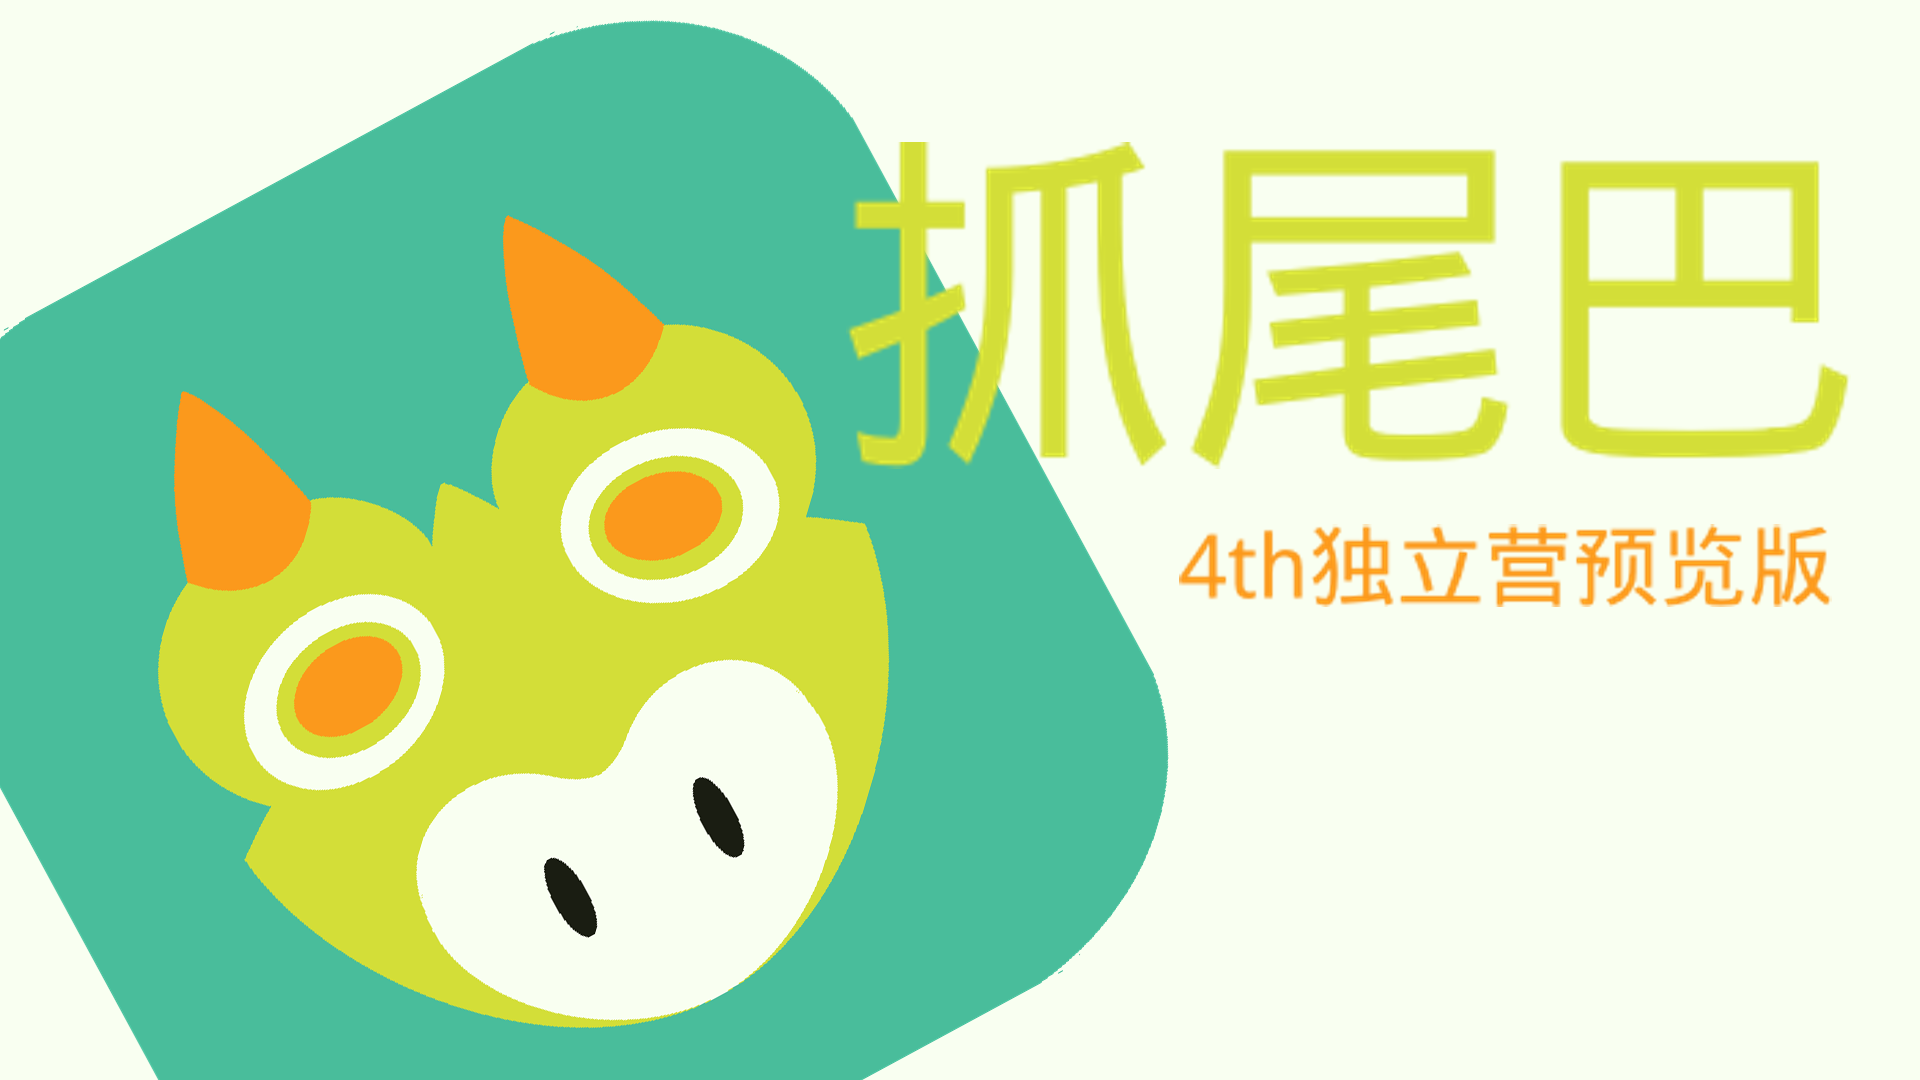 Banner of 抓尾巴 